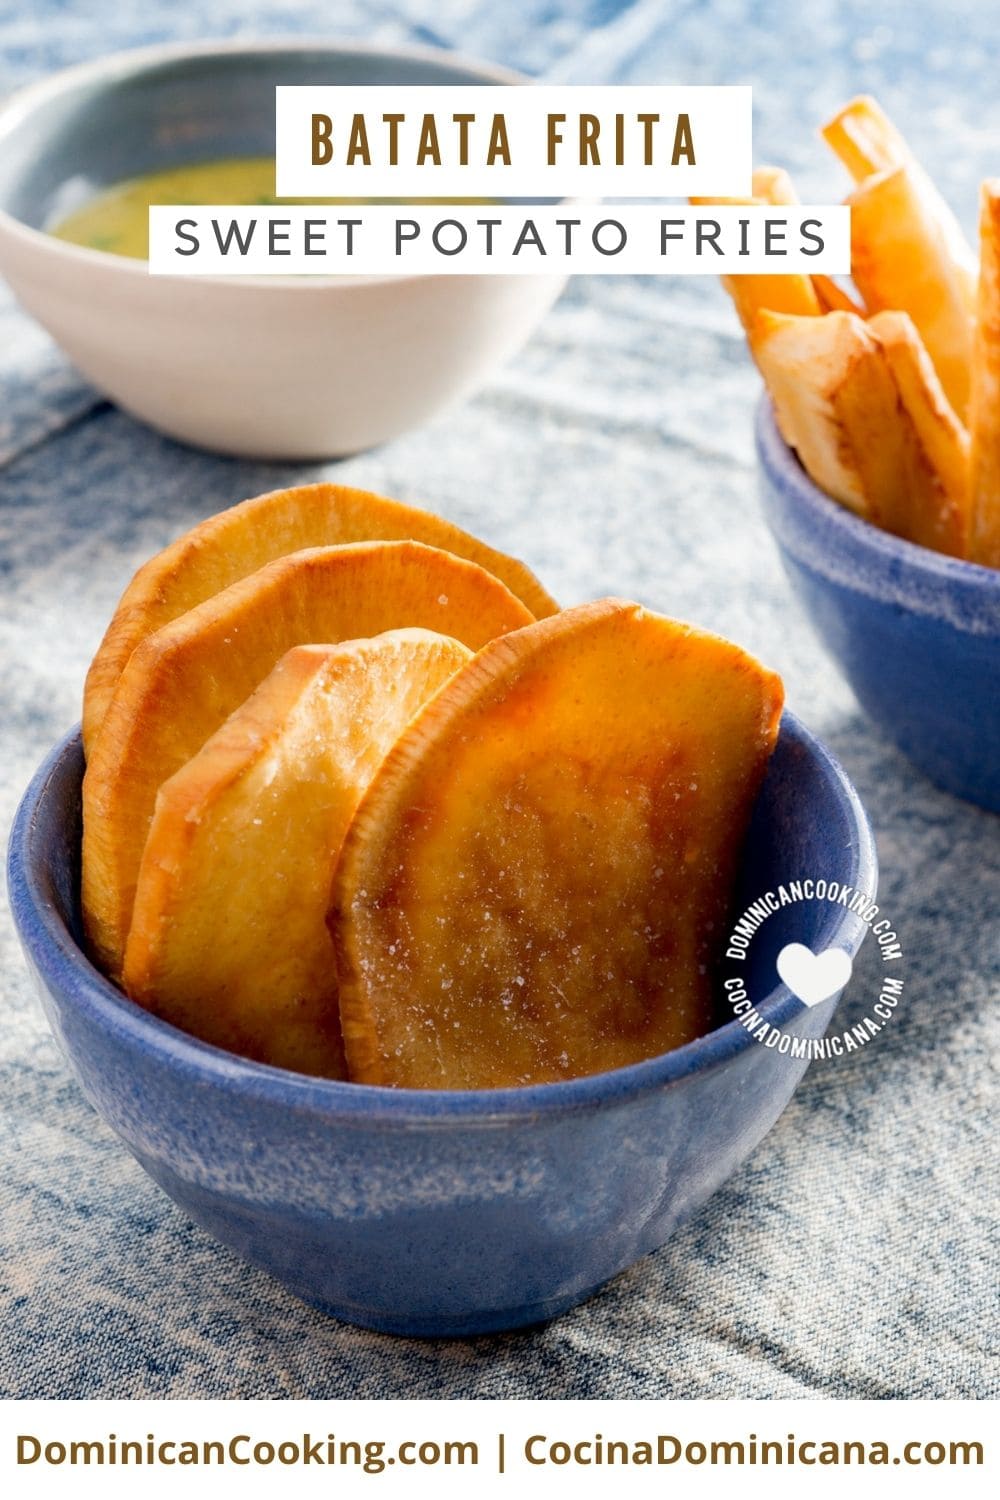 Batata frita (sweet potato fries) recipe.